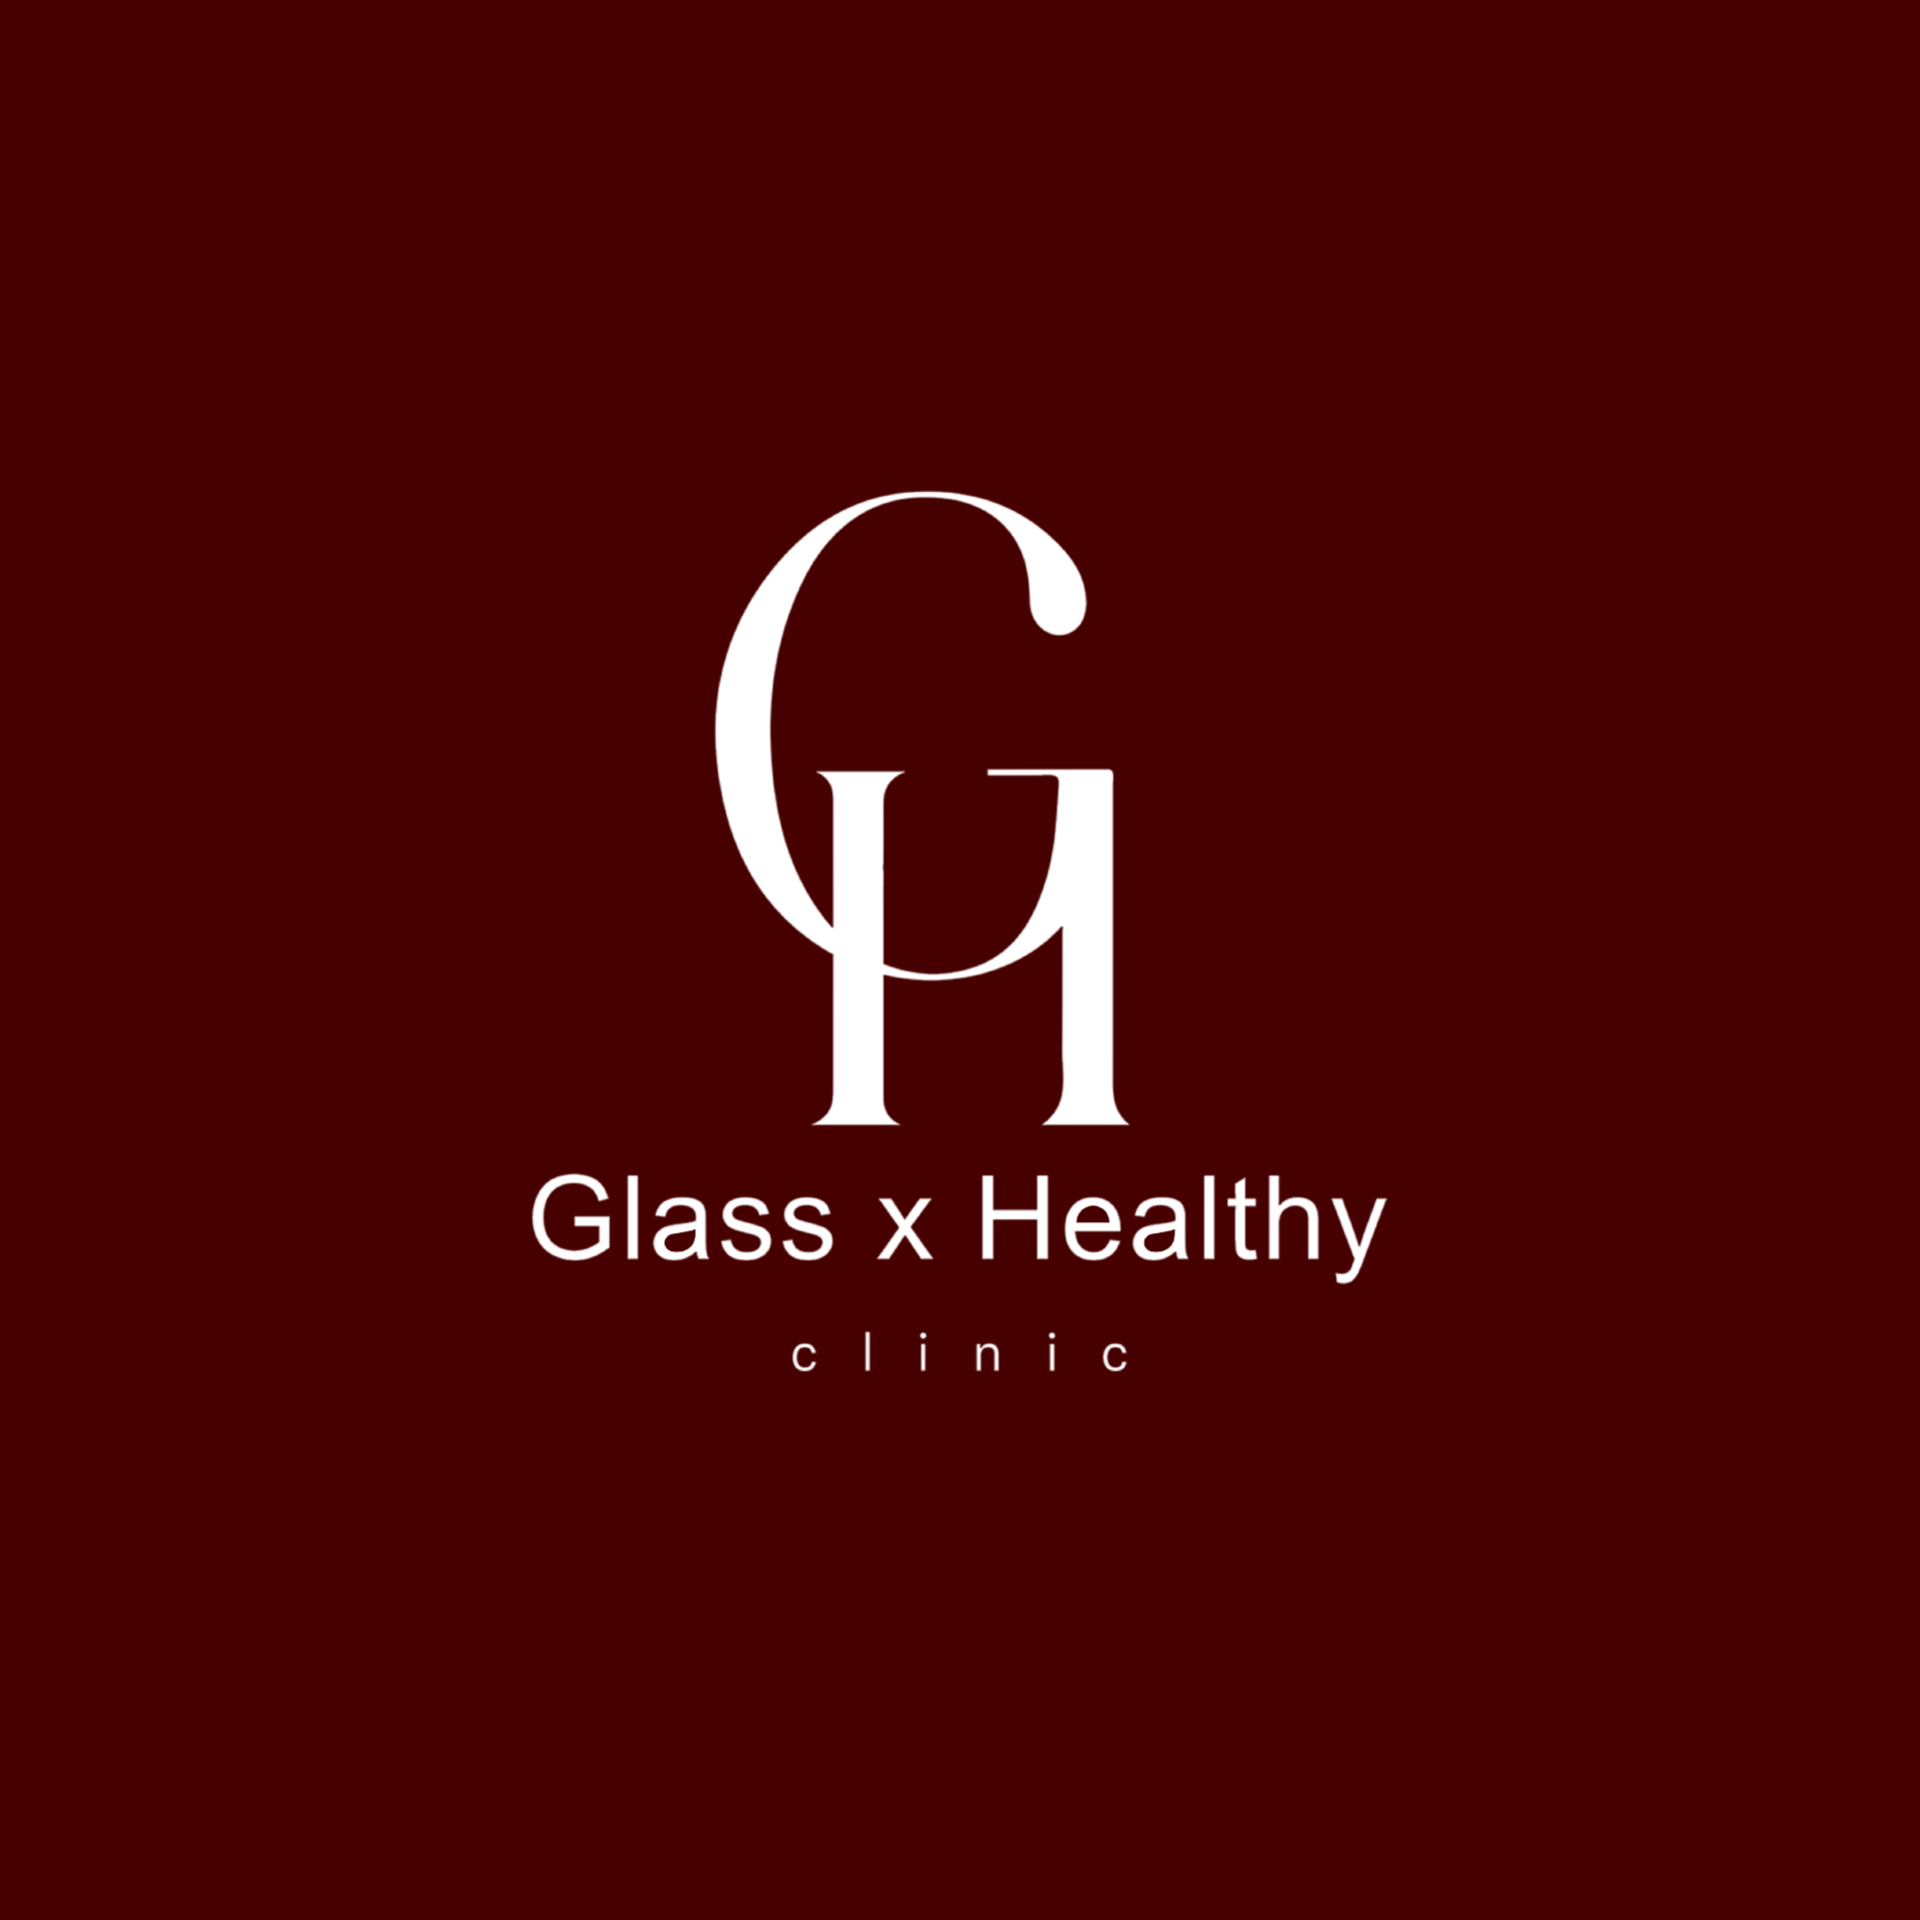 Glass x healthy Clinic